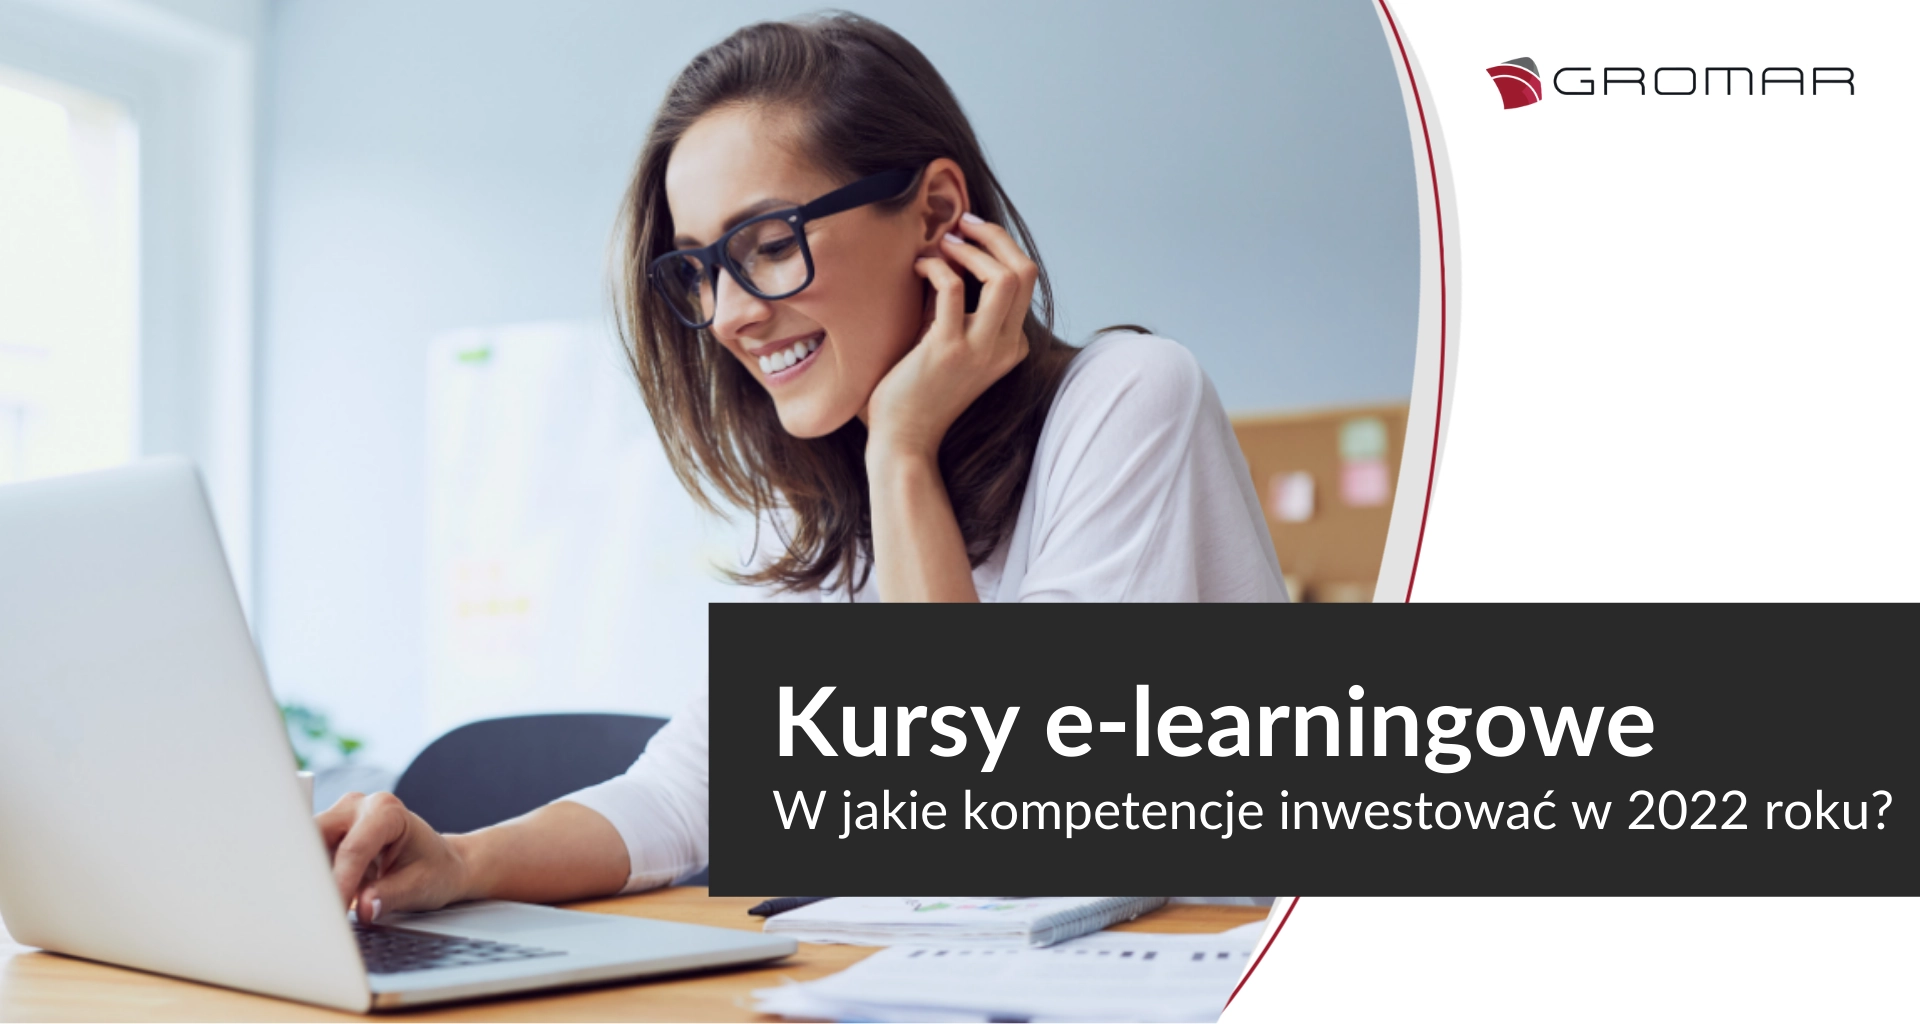 kursy e-learningowe